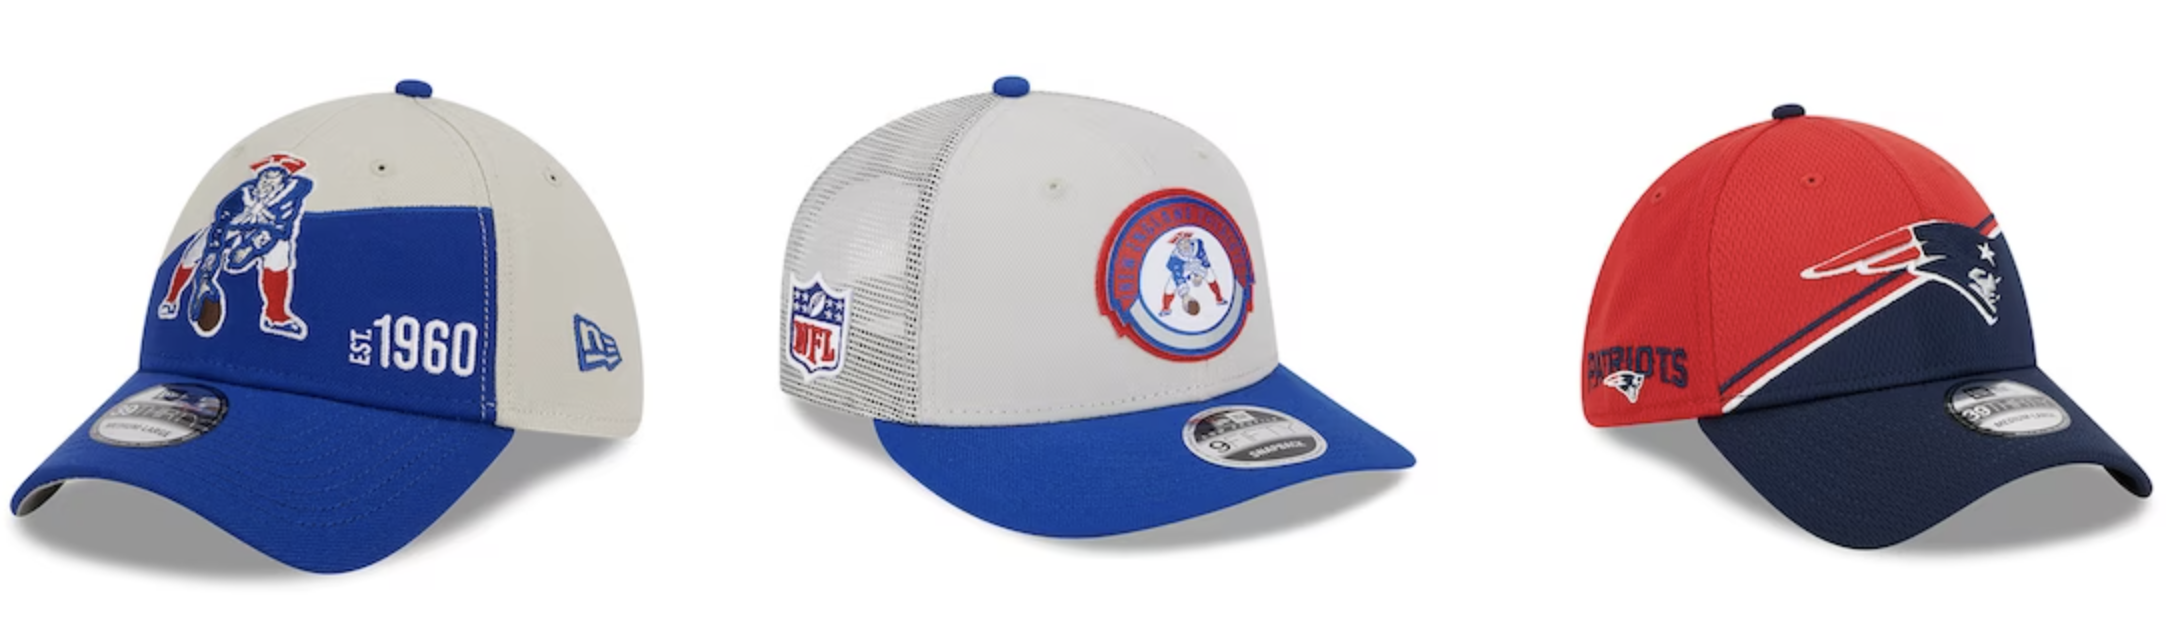 Men's New Era Cream/Blue England Patriots 2023 Sideline Historic Pom Cuffed Knit Hat